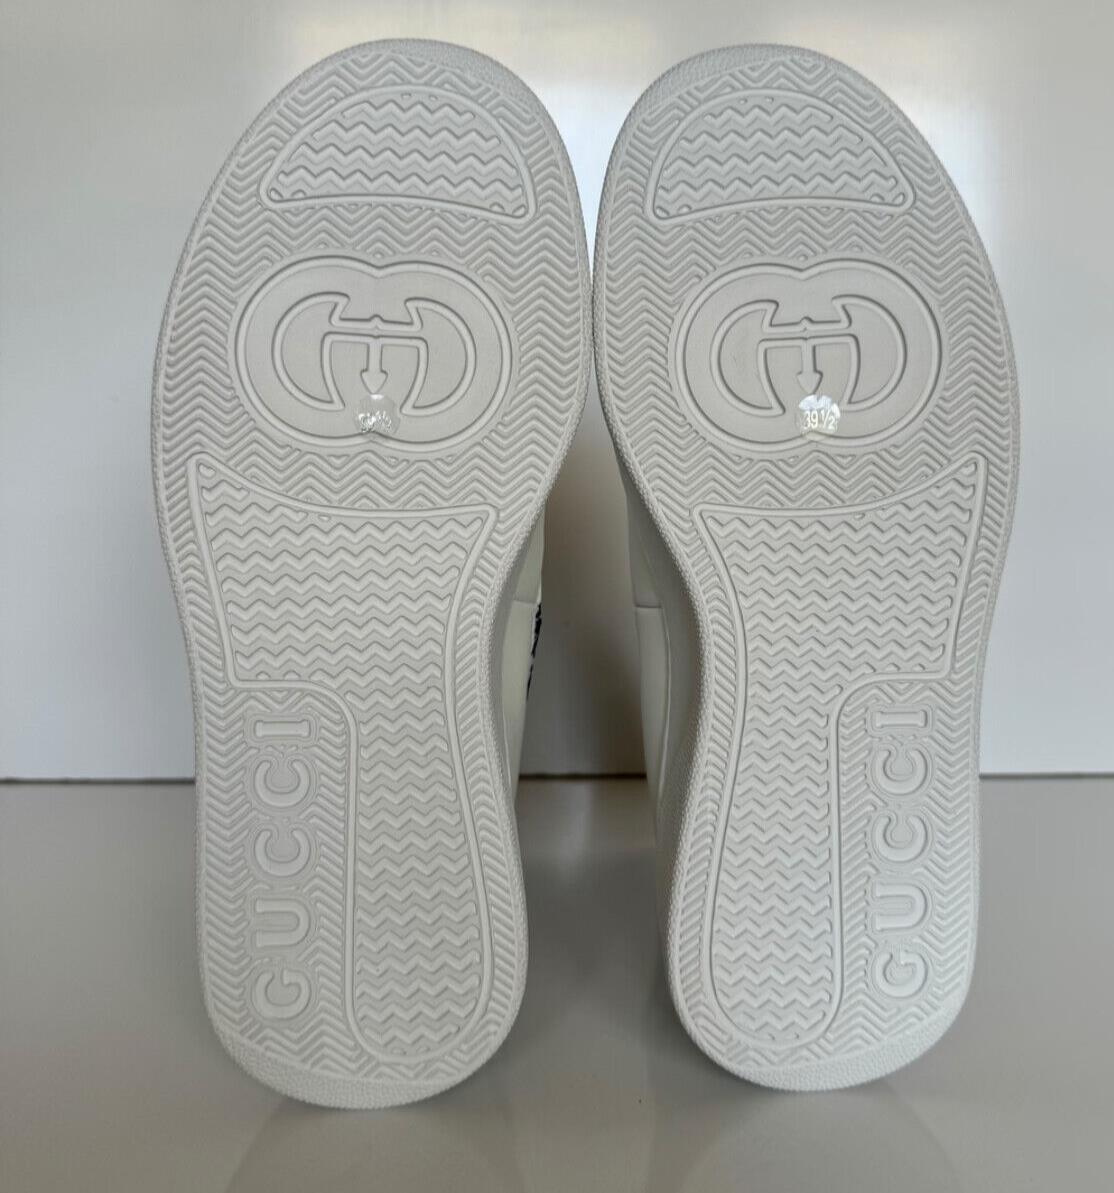 Gucci Women's GG Dali Soft Leather White Boots 9.5 US (39.5 Euro) 718718 IT NIB